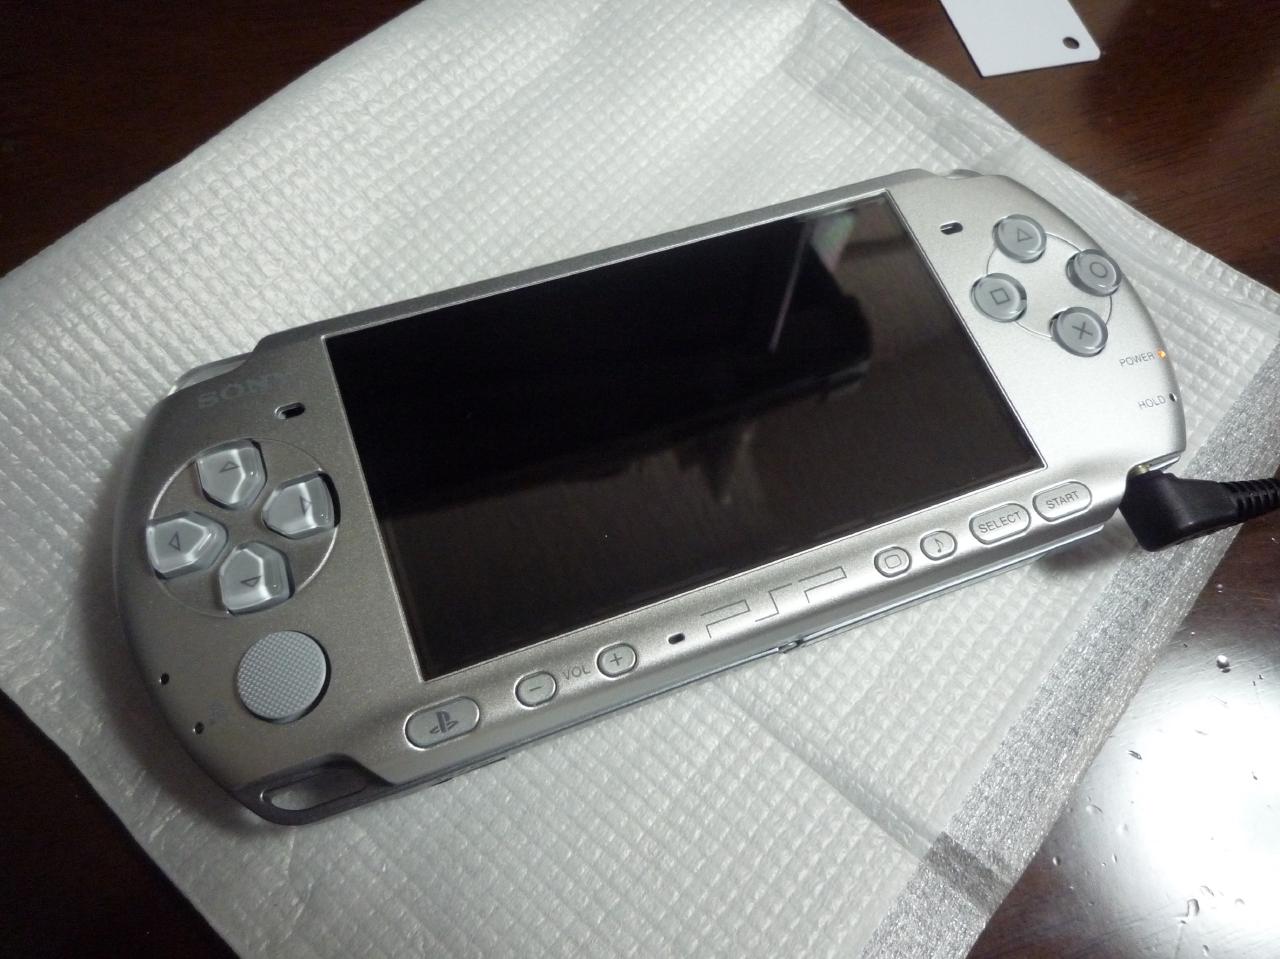 PSP-3000を購入